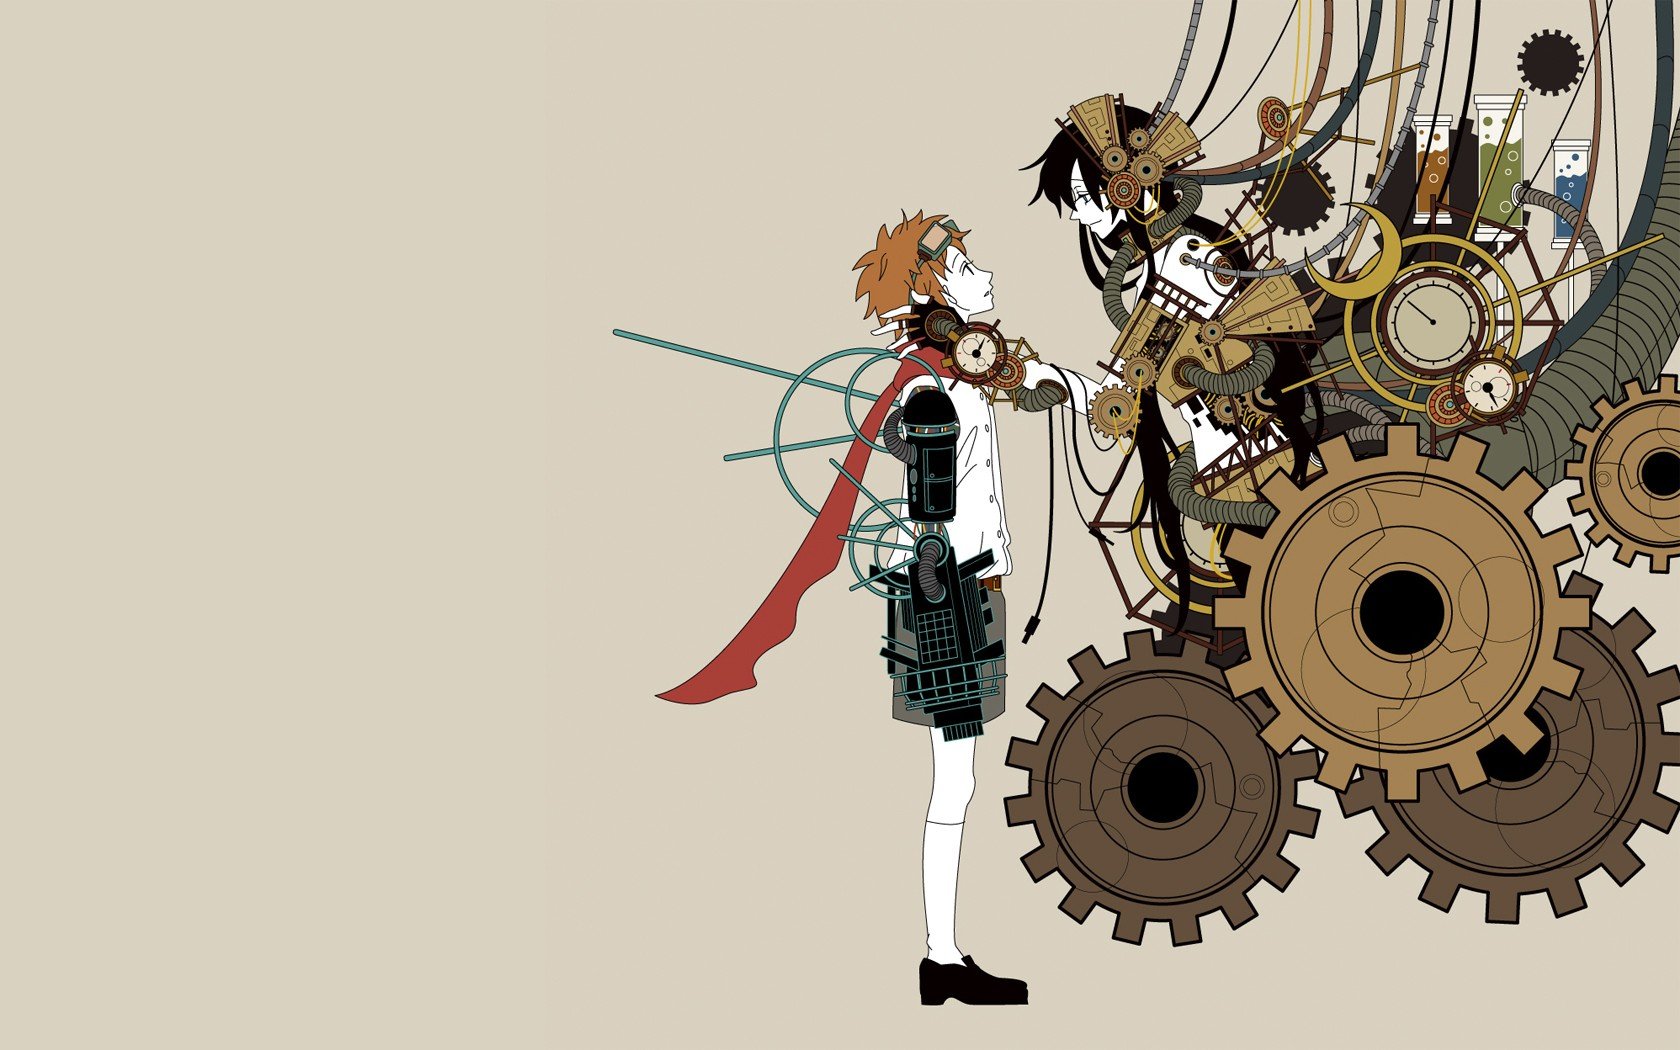 steampunk art is love #17 | Anime Amino